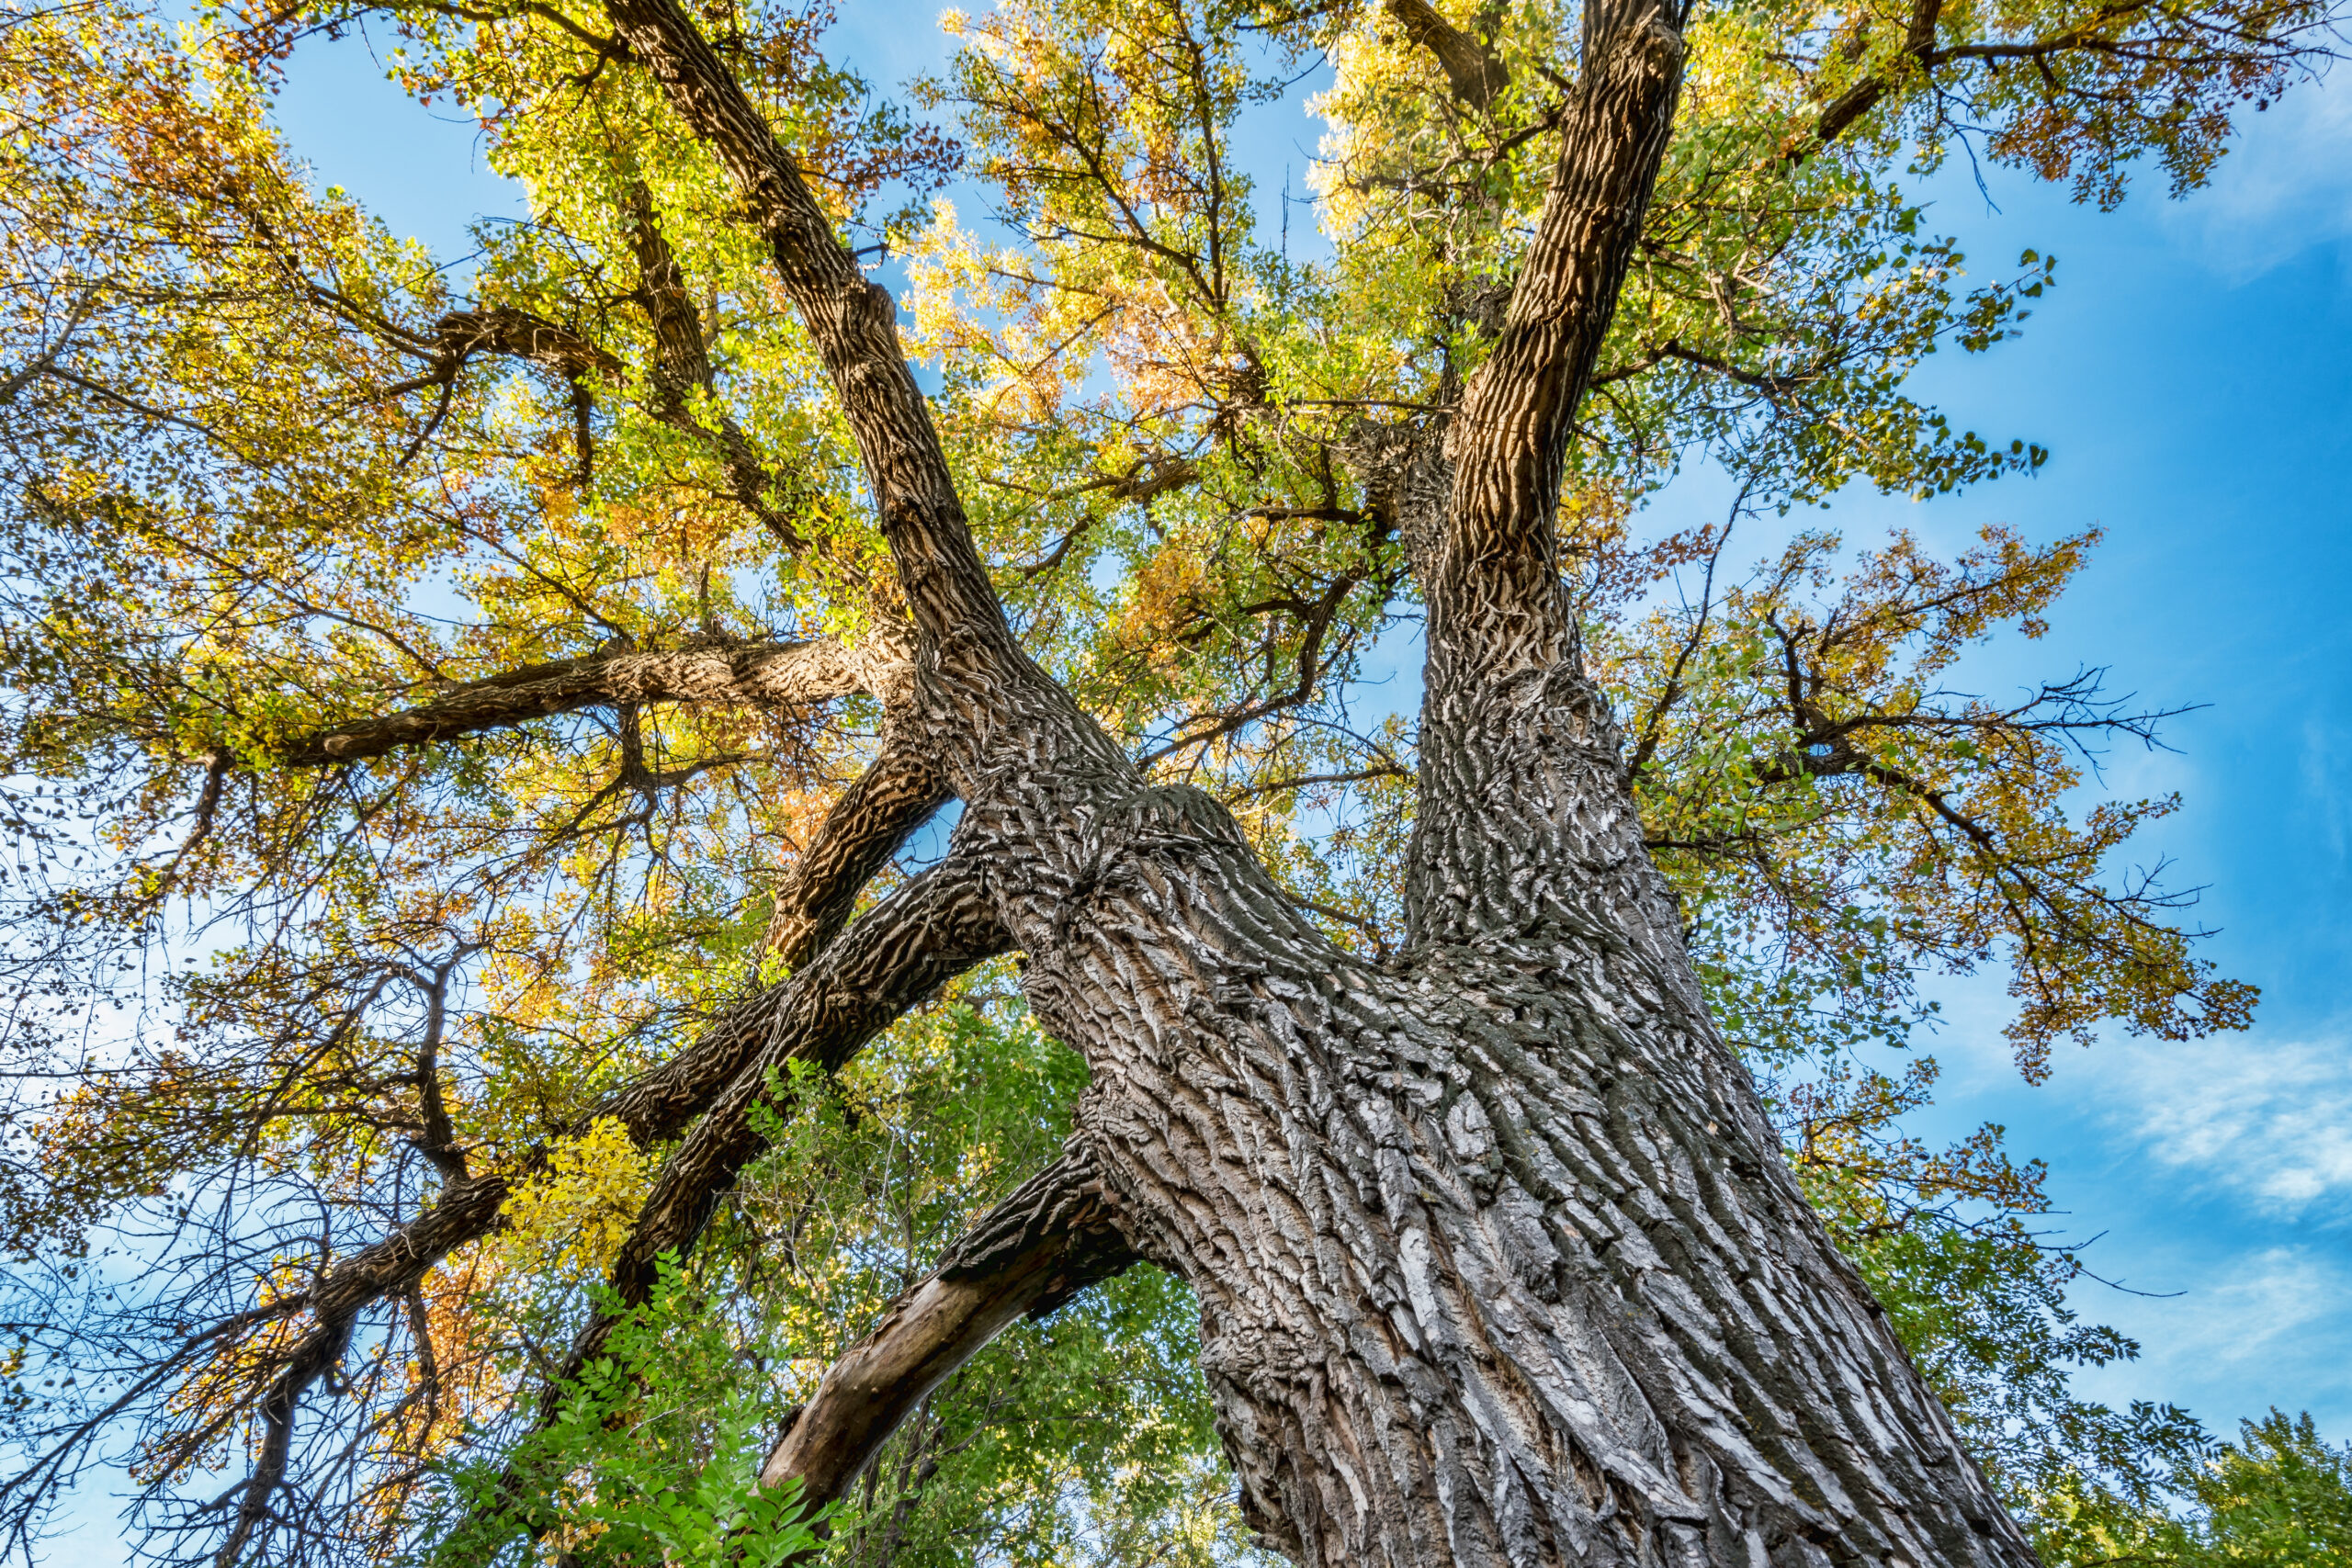 Giant,Cottonwood,Tree,With,Fall,Foliage,Native,To,Colorado,Plains,